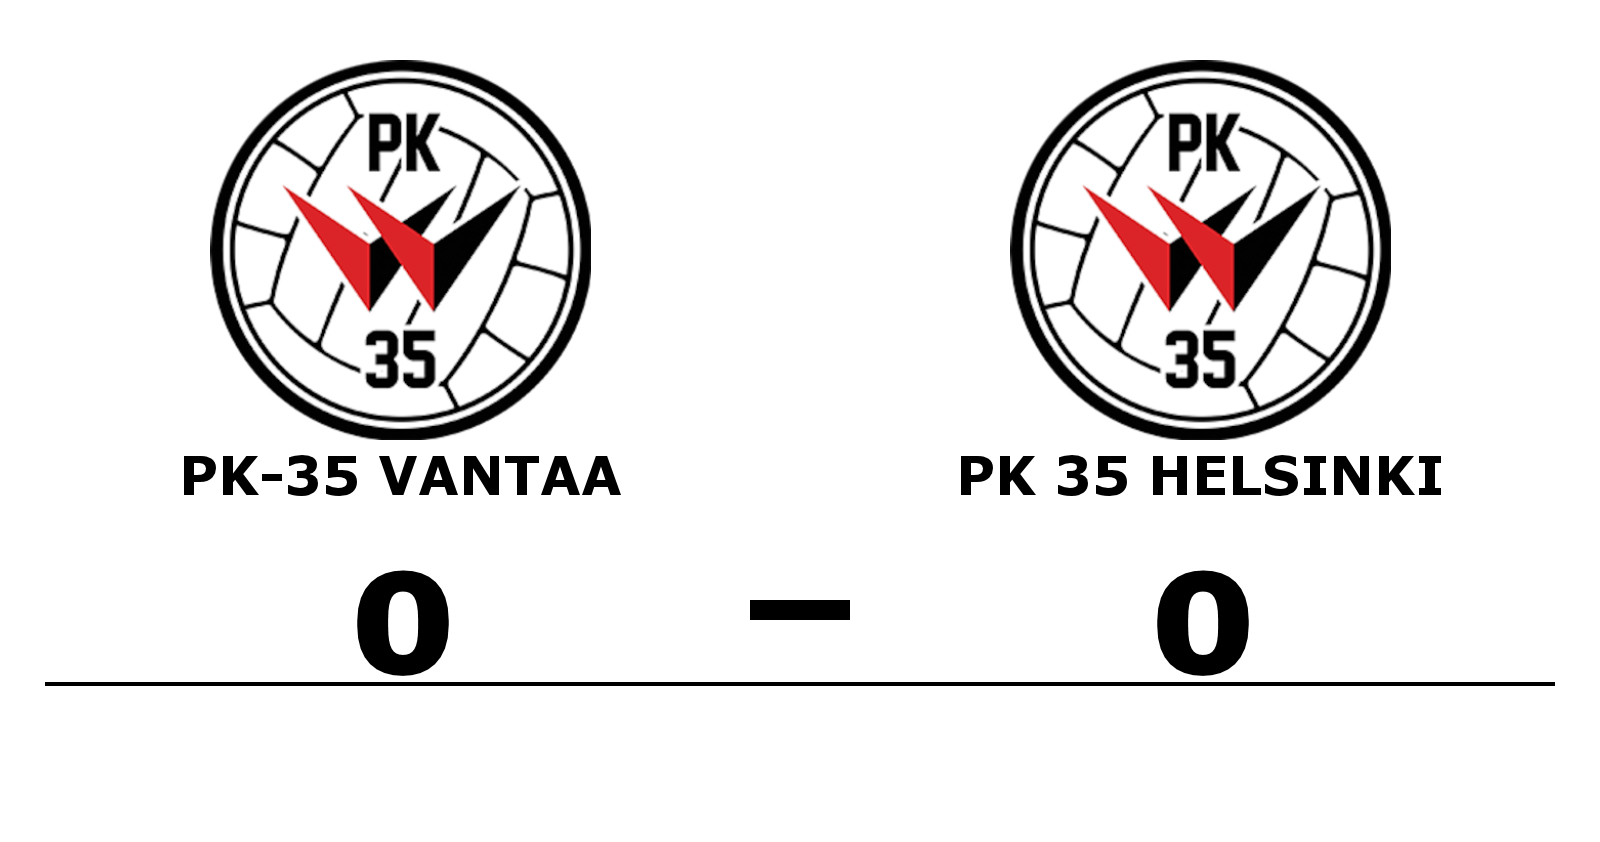 PK-35 Vantaa spelade lika mot PK 35 Helsinki